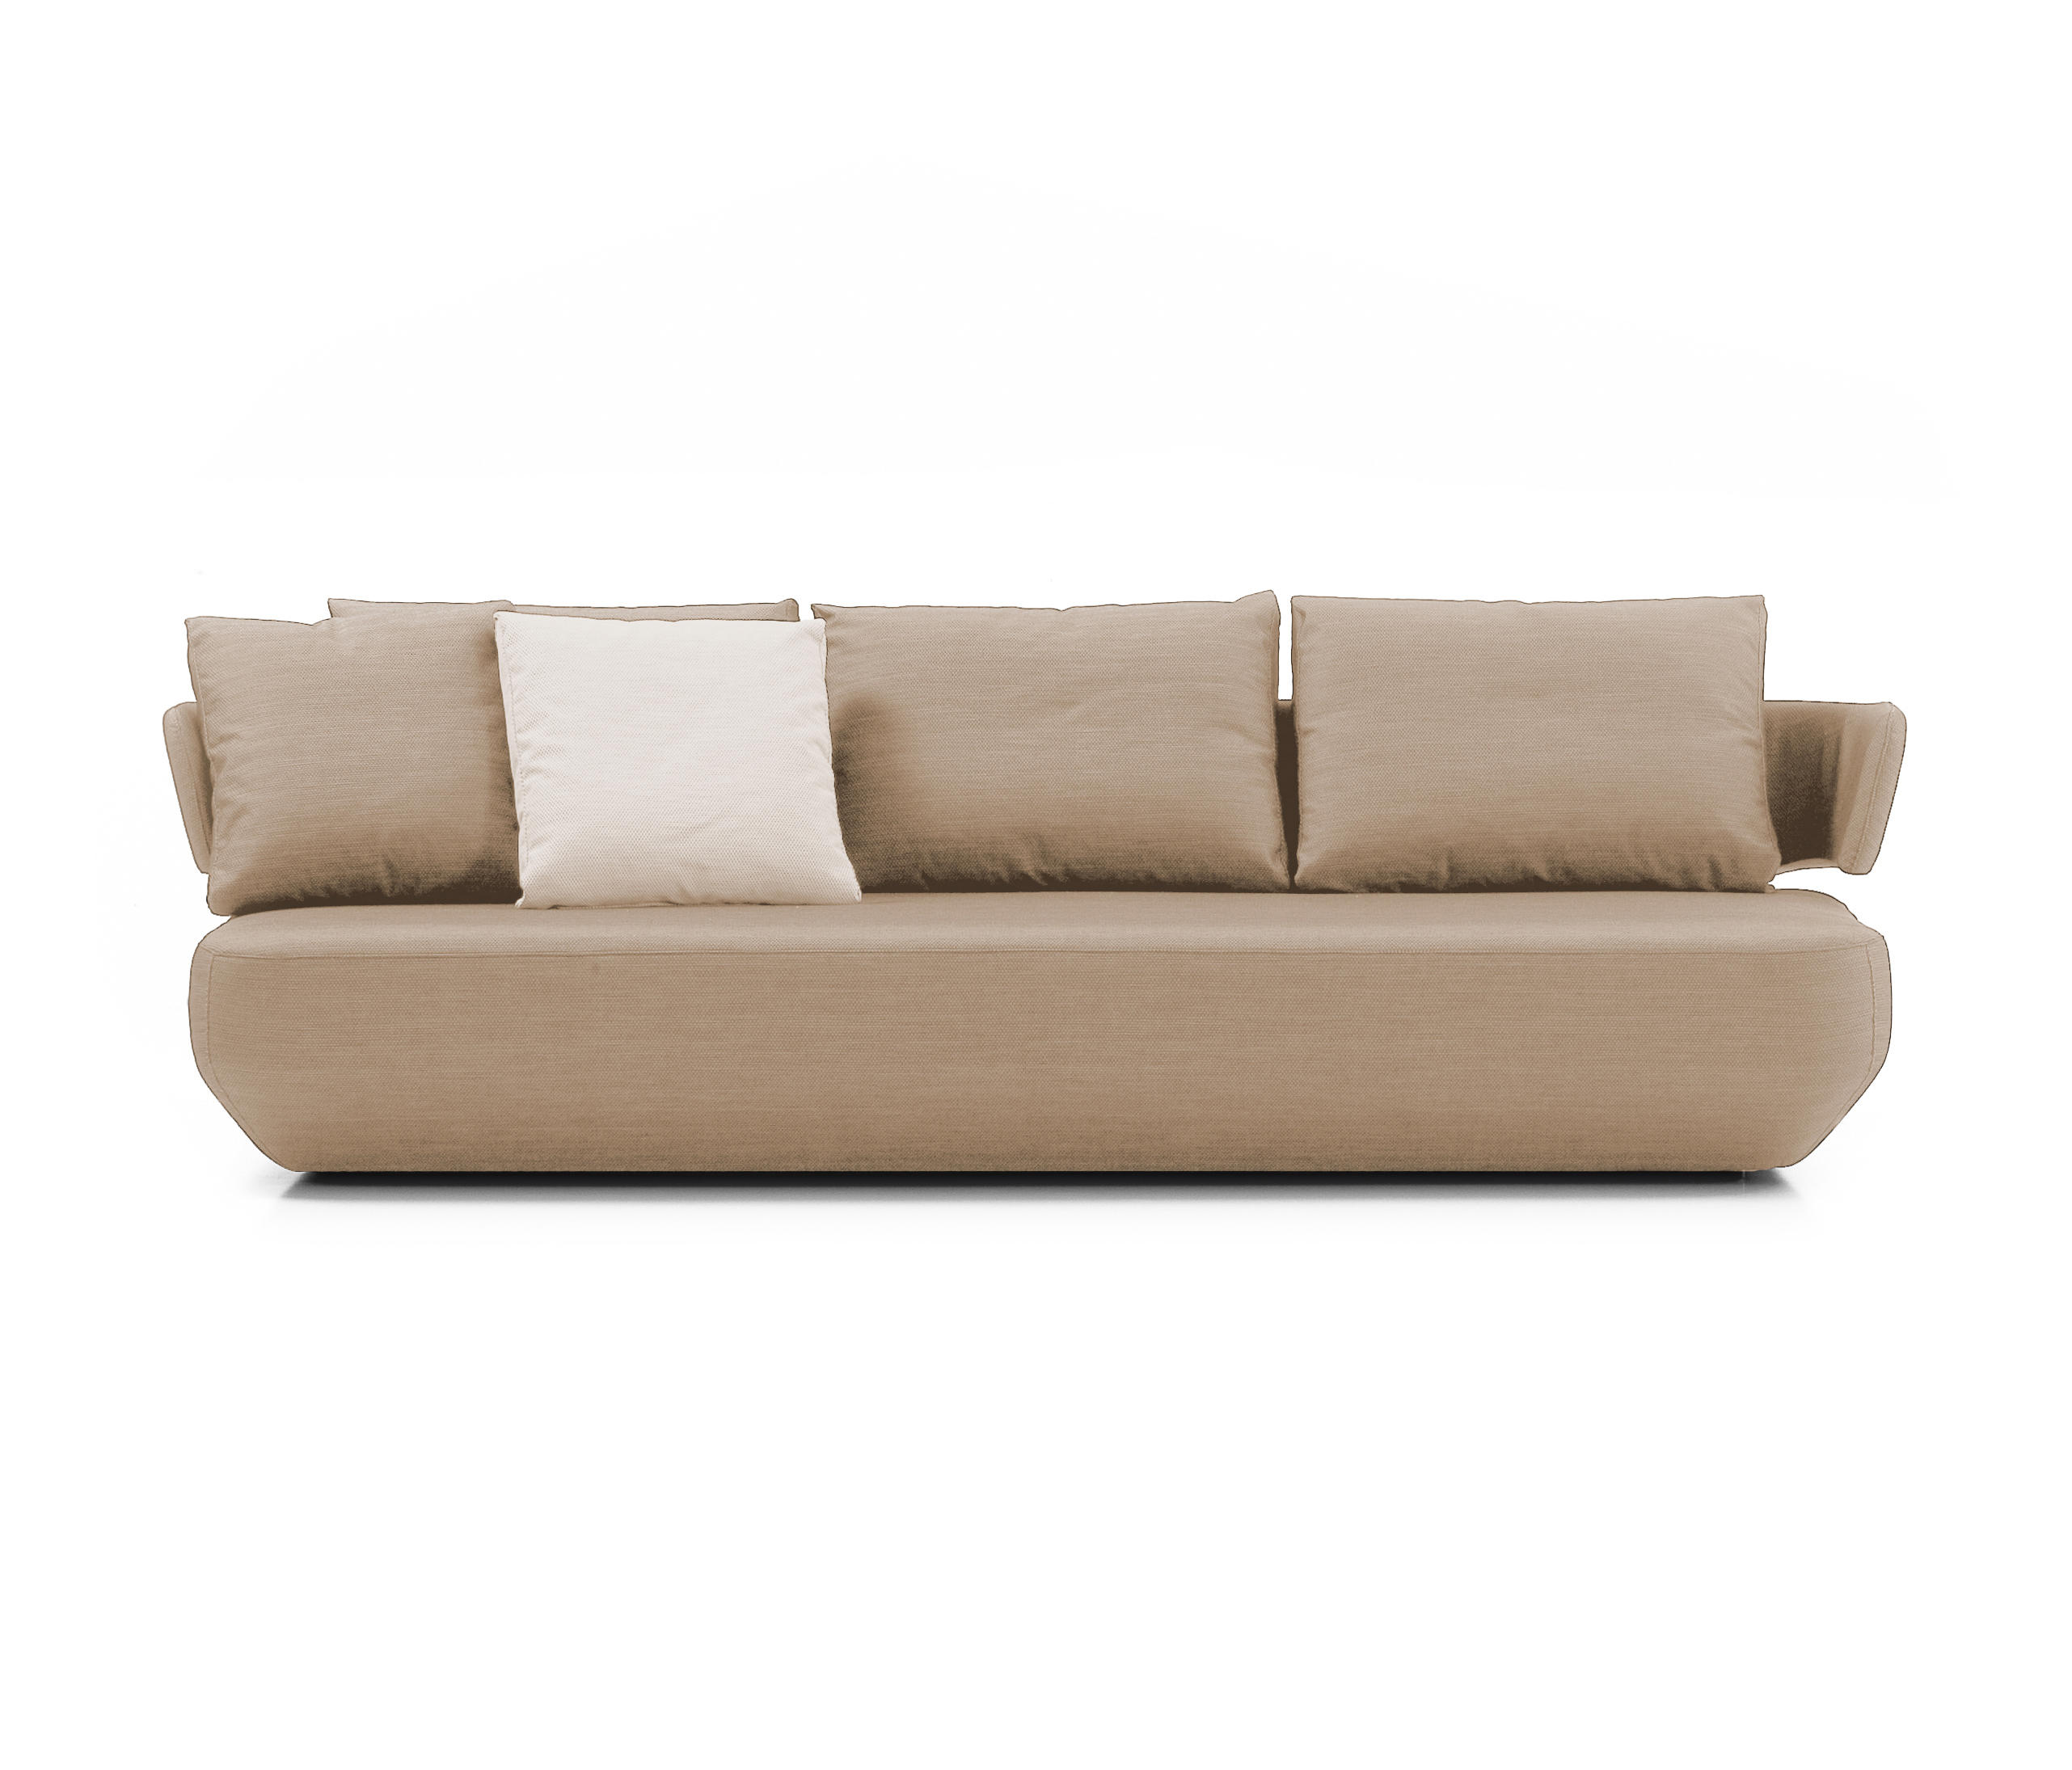 LEVITT SOFA - Sofas from viccarbe | Architonic